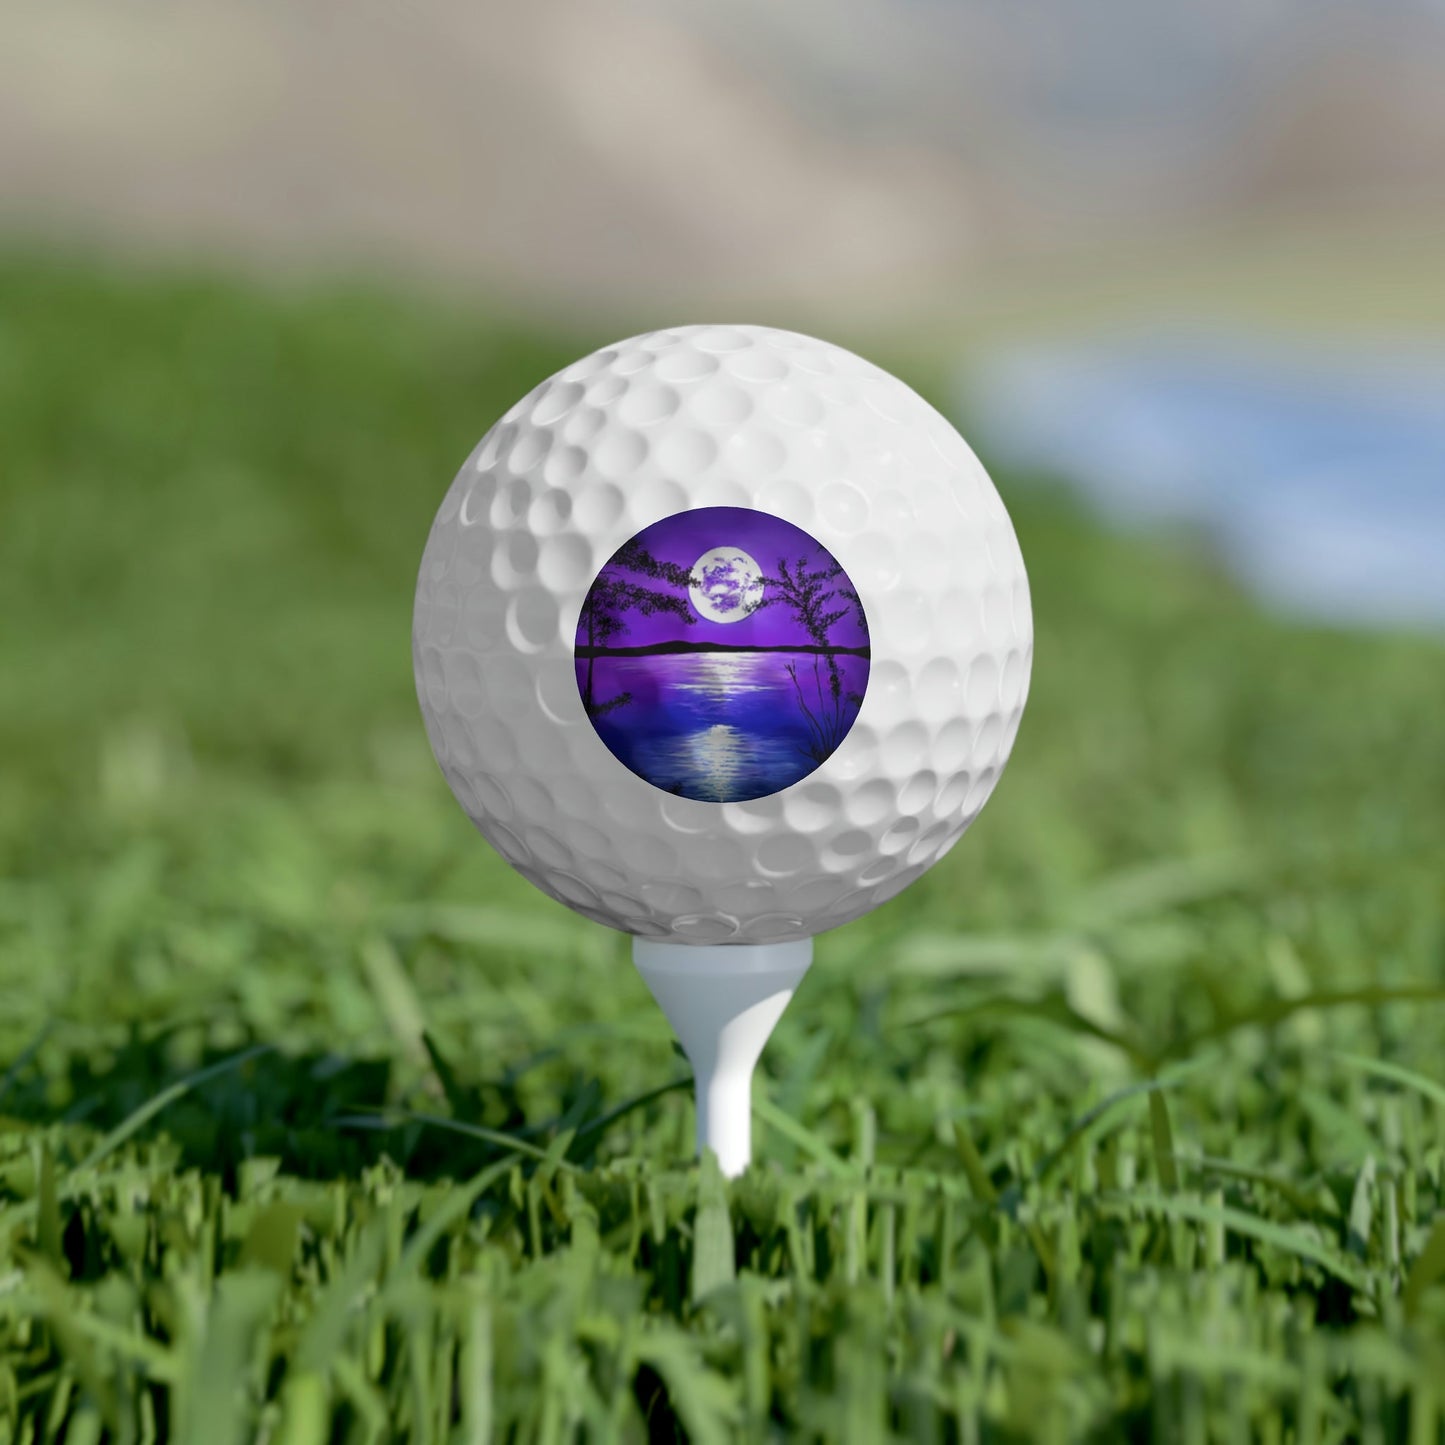 Golf Balls, 6pcs - "PURPLE MOONLIGHT" | Custom Artwork Print